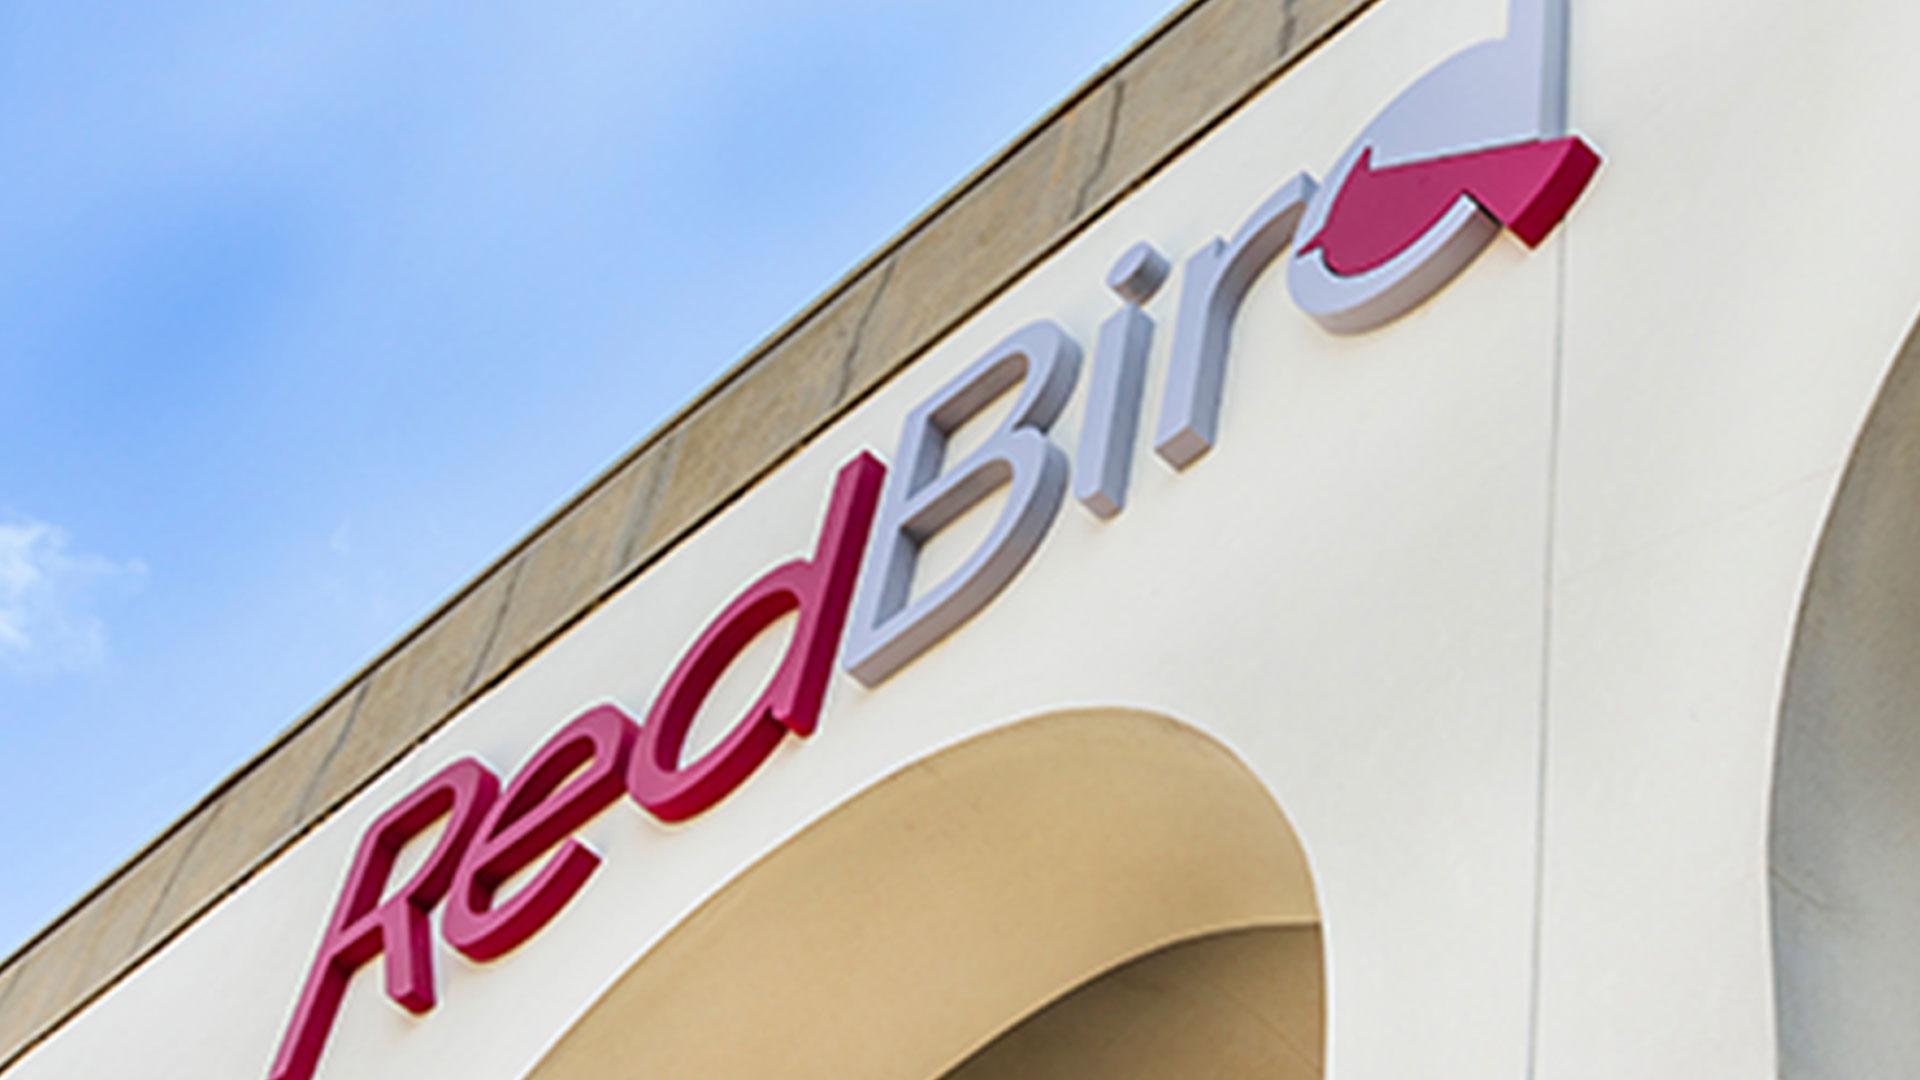 redbird-brand-identity-signage